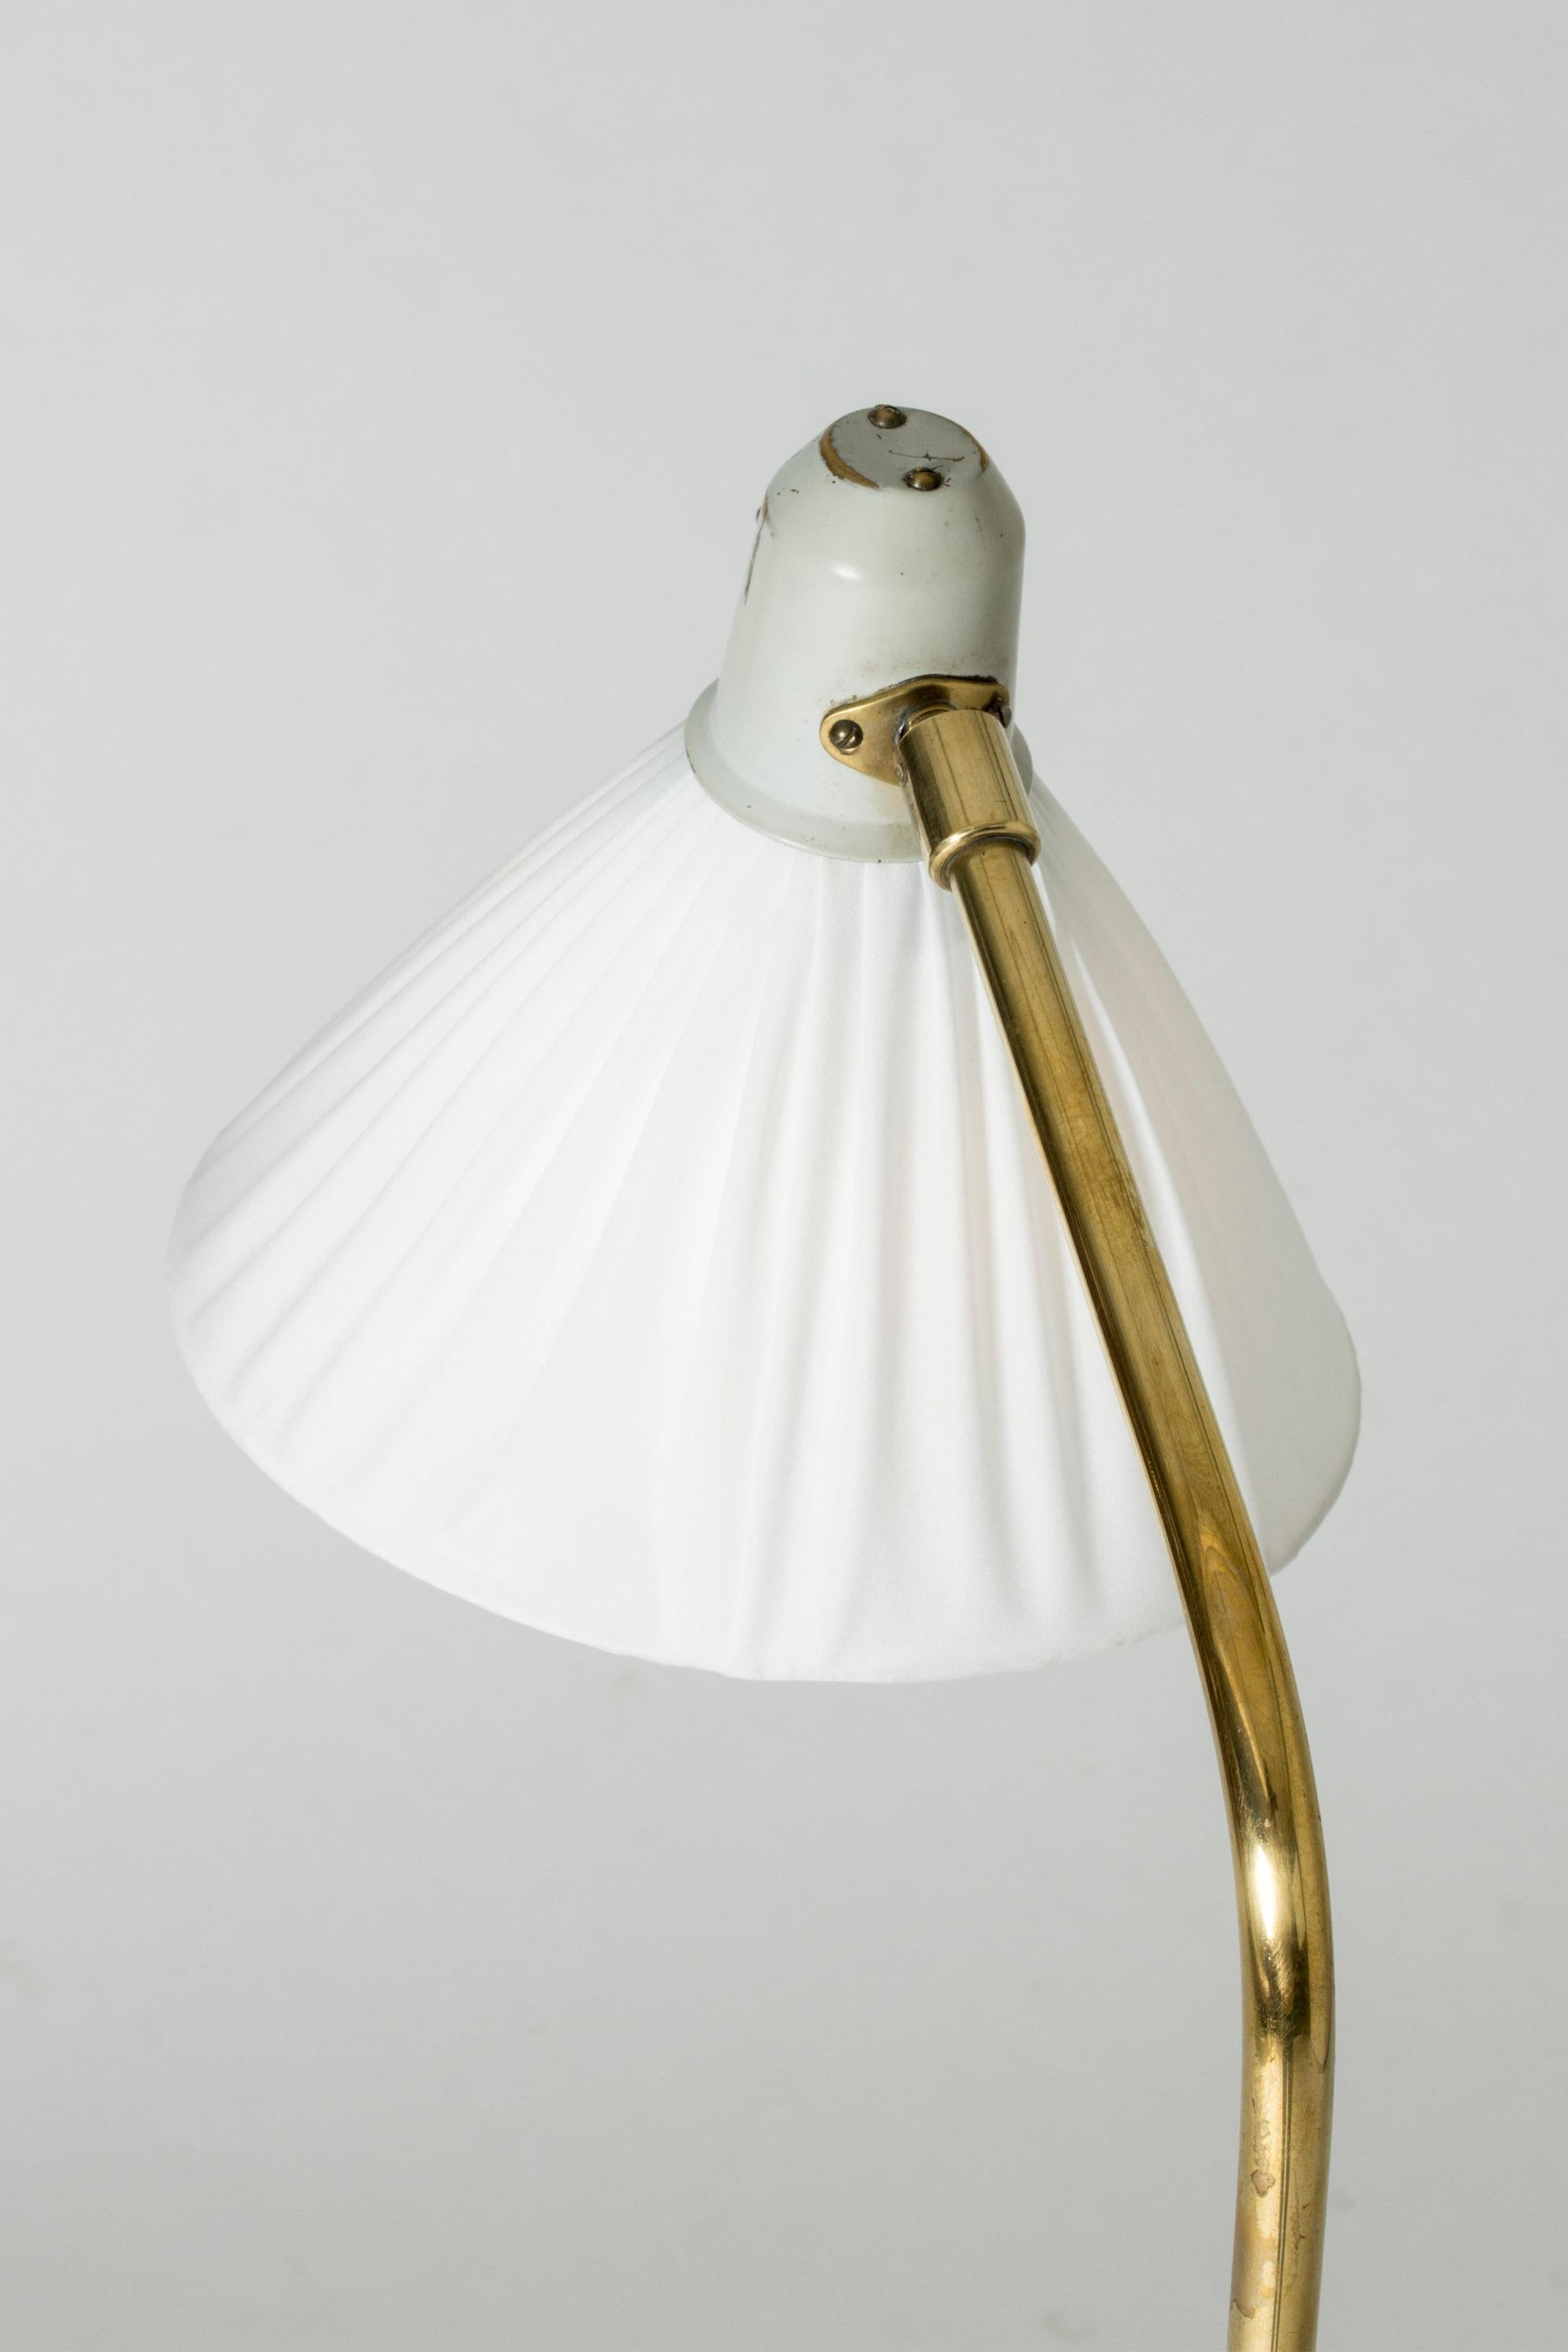 Metal Wood and Brass Floor Lamp from Asea, Sweden